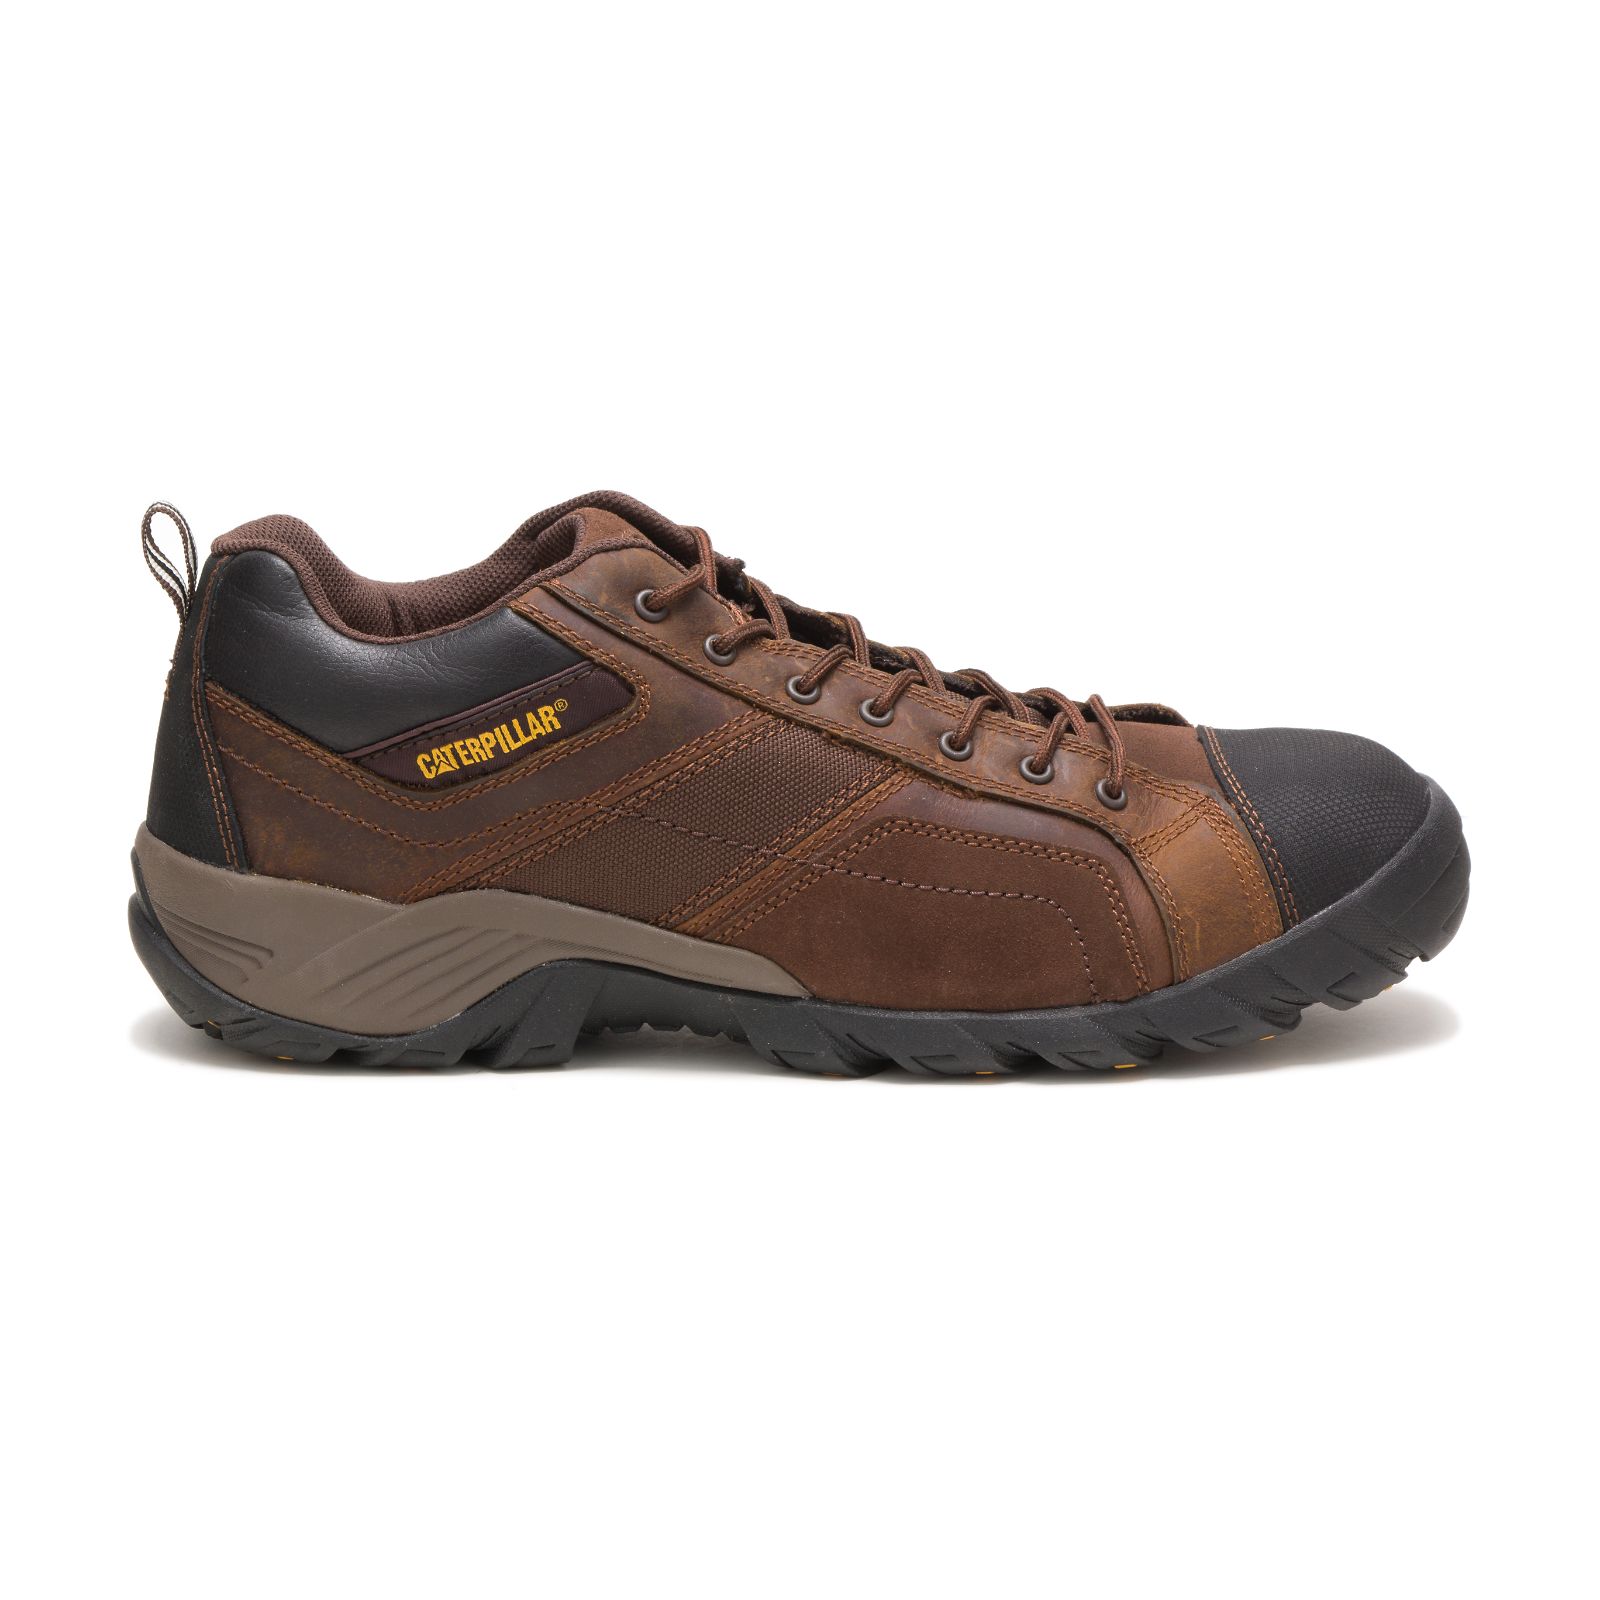 Caterpillar Work Shoes Dubai - Caterpillar Argon Composite Toe Mens - Dark Brown KPRJWV643